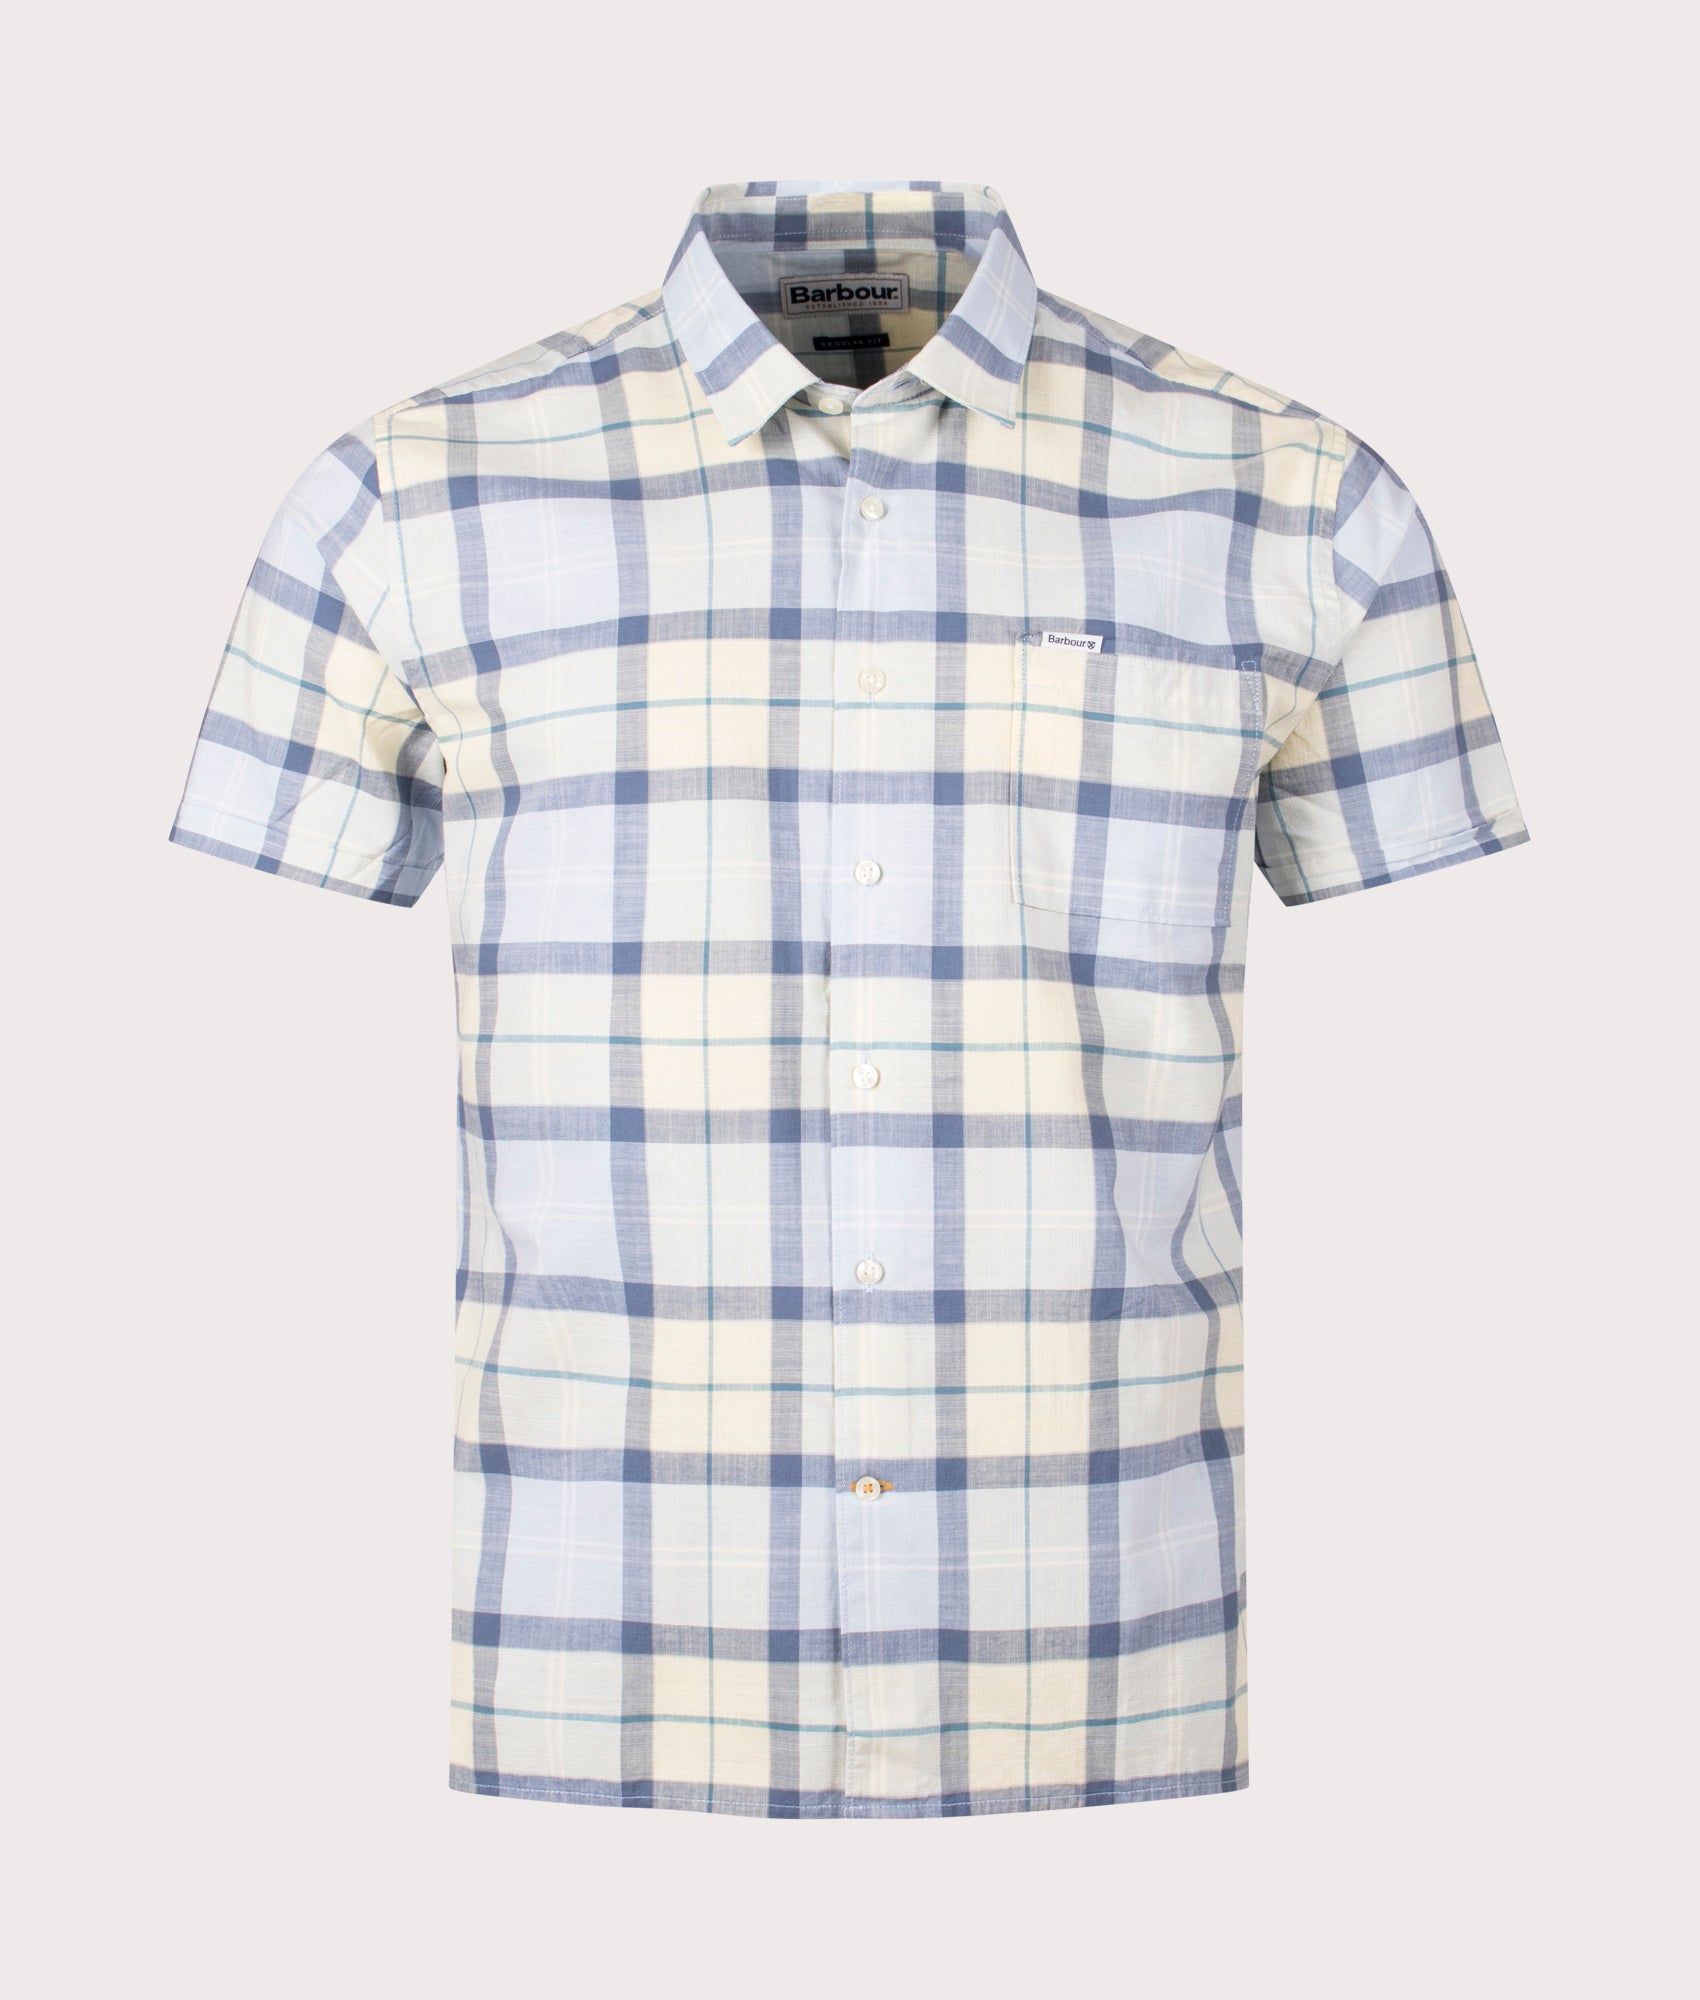 Barbour Lifestyle Mens Short Sleeve Gordon Shirt - Colour: TN25 Sandsend Tartan - Size: XL